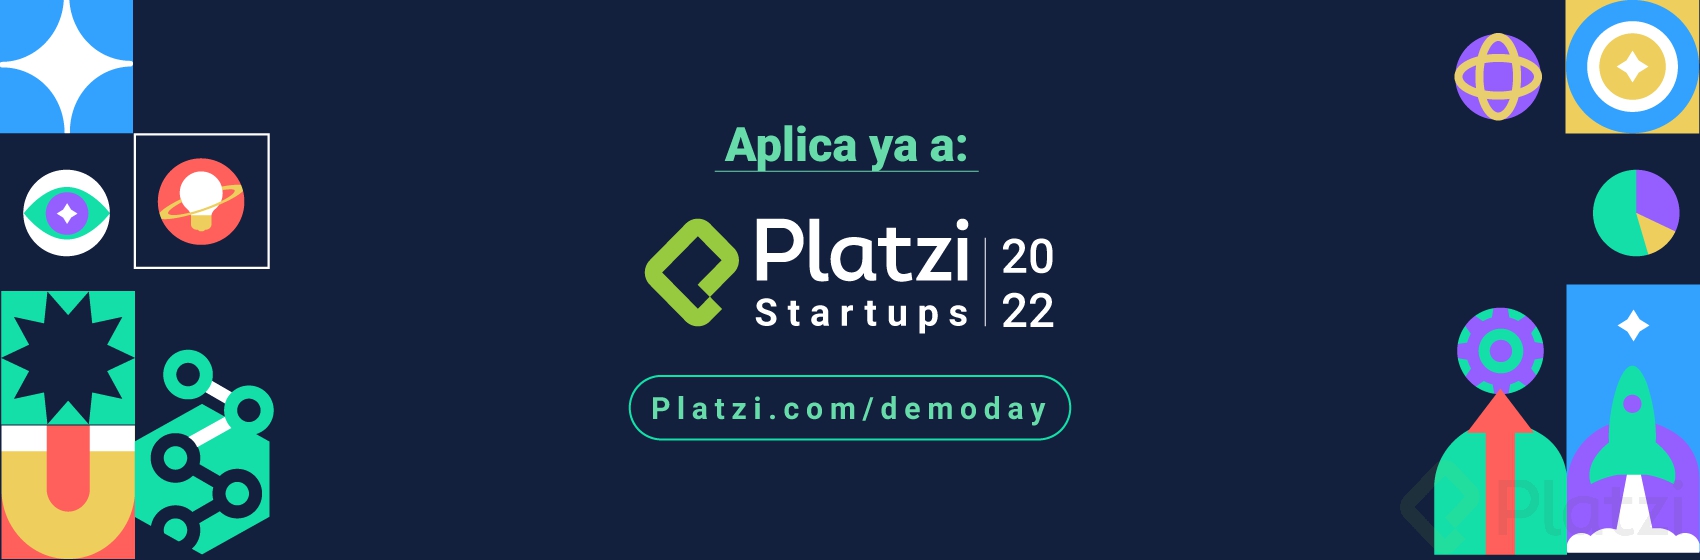 Platzi-Startups-Blogpost-Banner.png